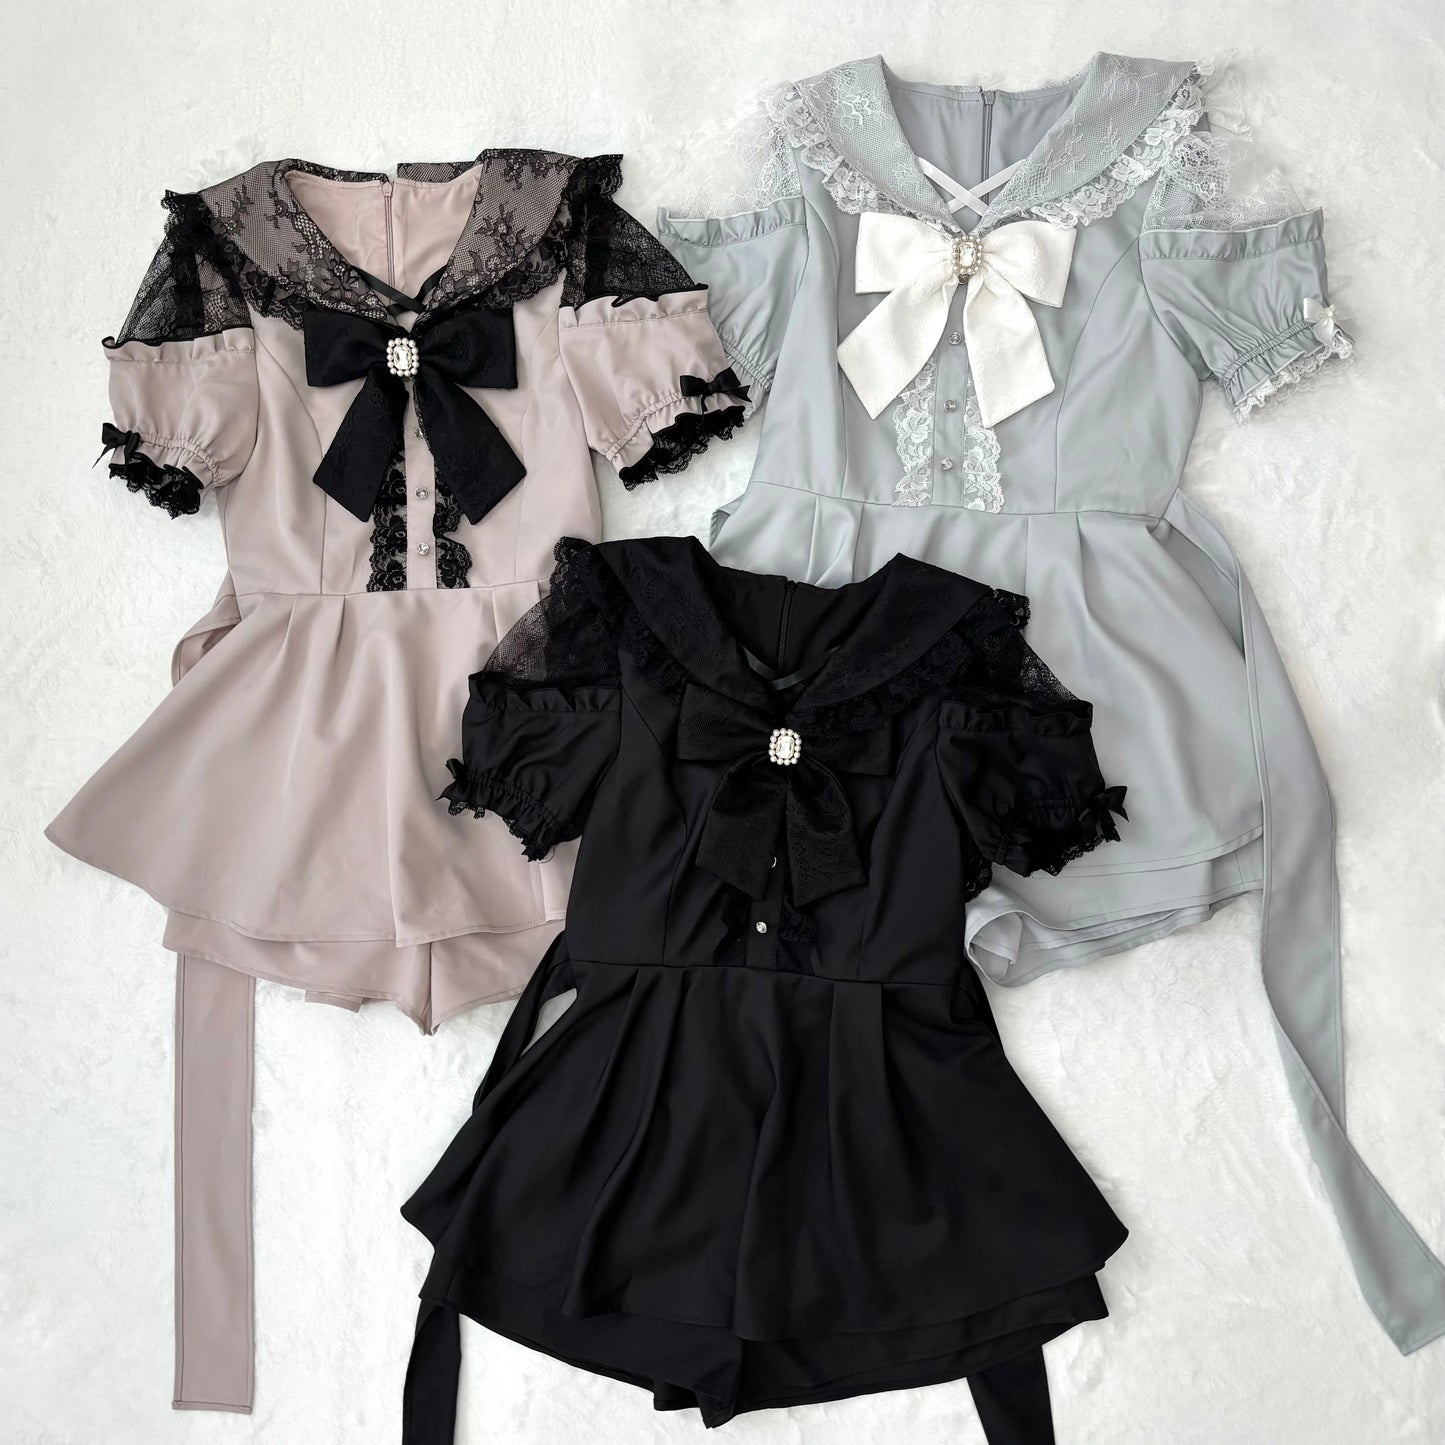 Jirai Kei Dress Set Black Short Sleeve Dress And Shorts 37848:571586